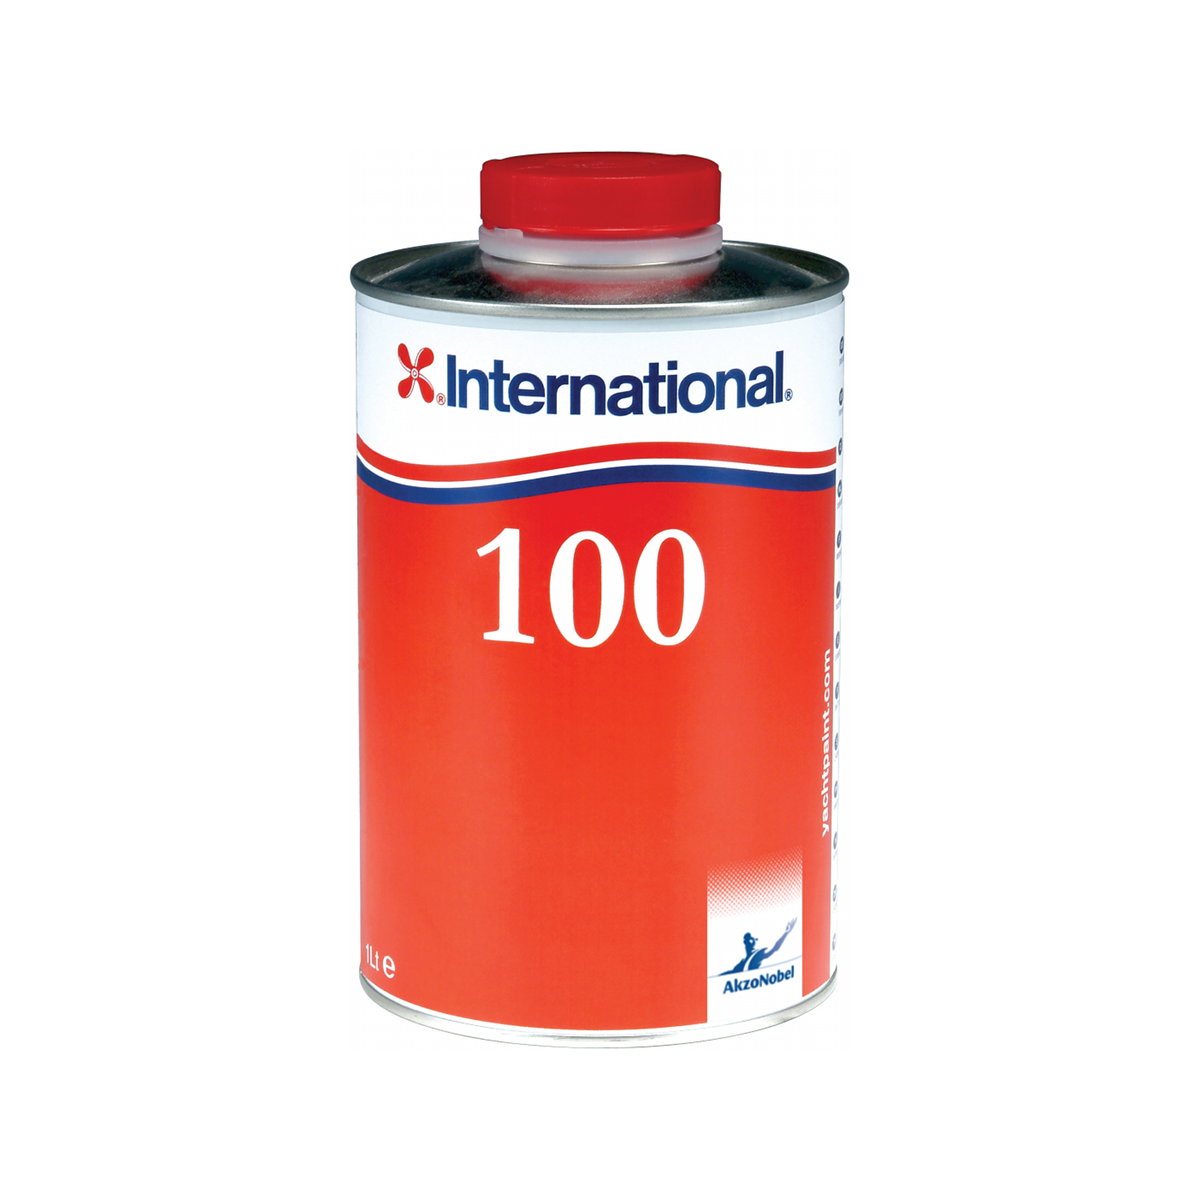 International Thinner verdunning No.100 - 1,0l/1000ml